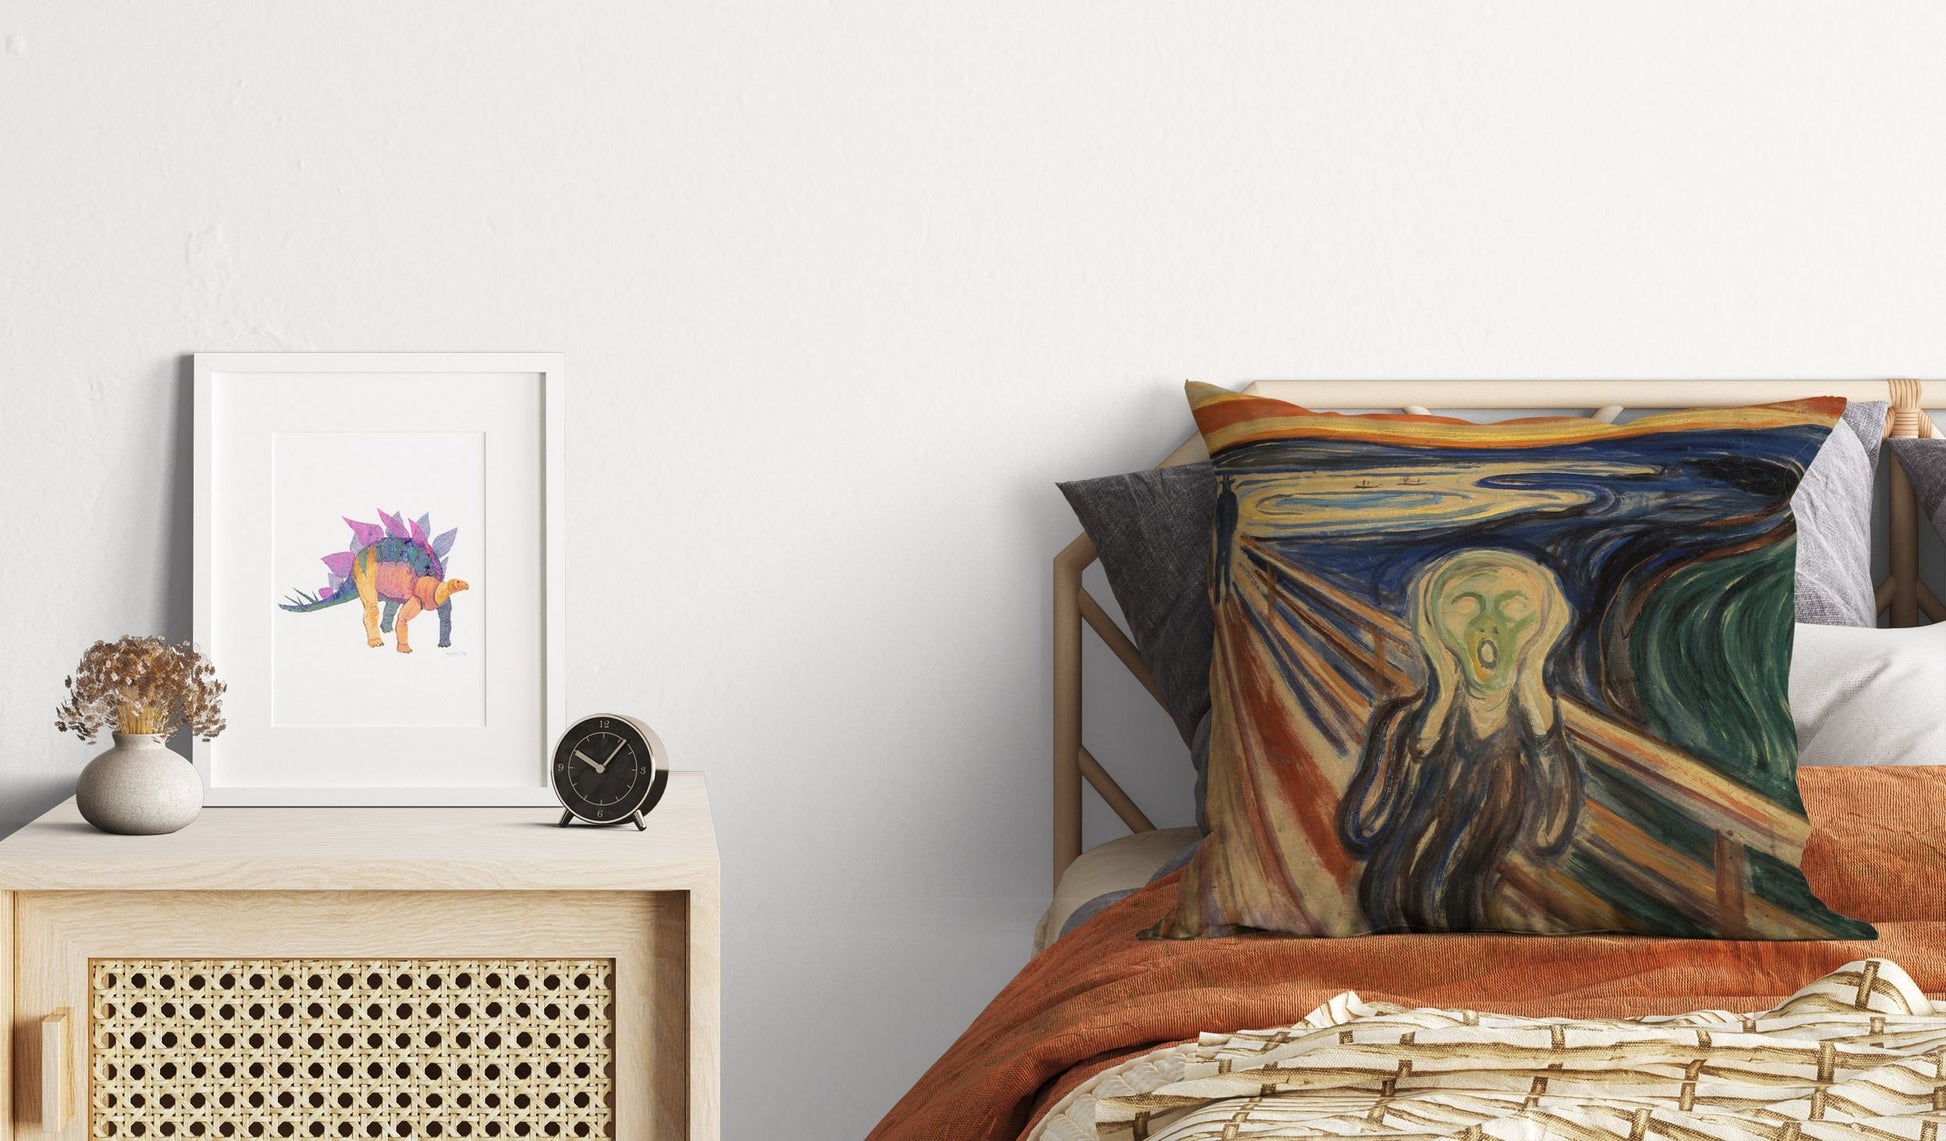 Edvard Munch Famous Art Scream, Tapestry Pillows, Abstract Pillow, Soft Pillow Cases, 18 X 18 Pillow Covers, Playroom Decor, Sofa Pillows